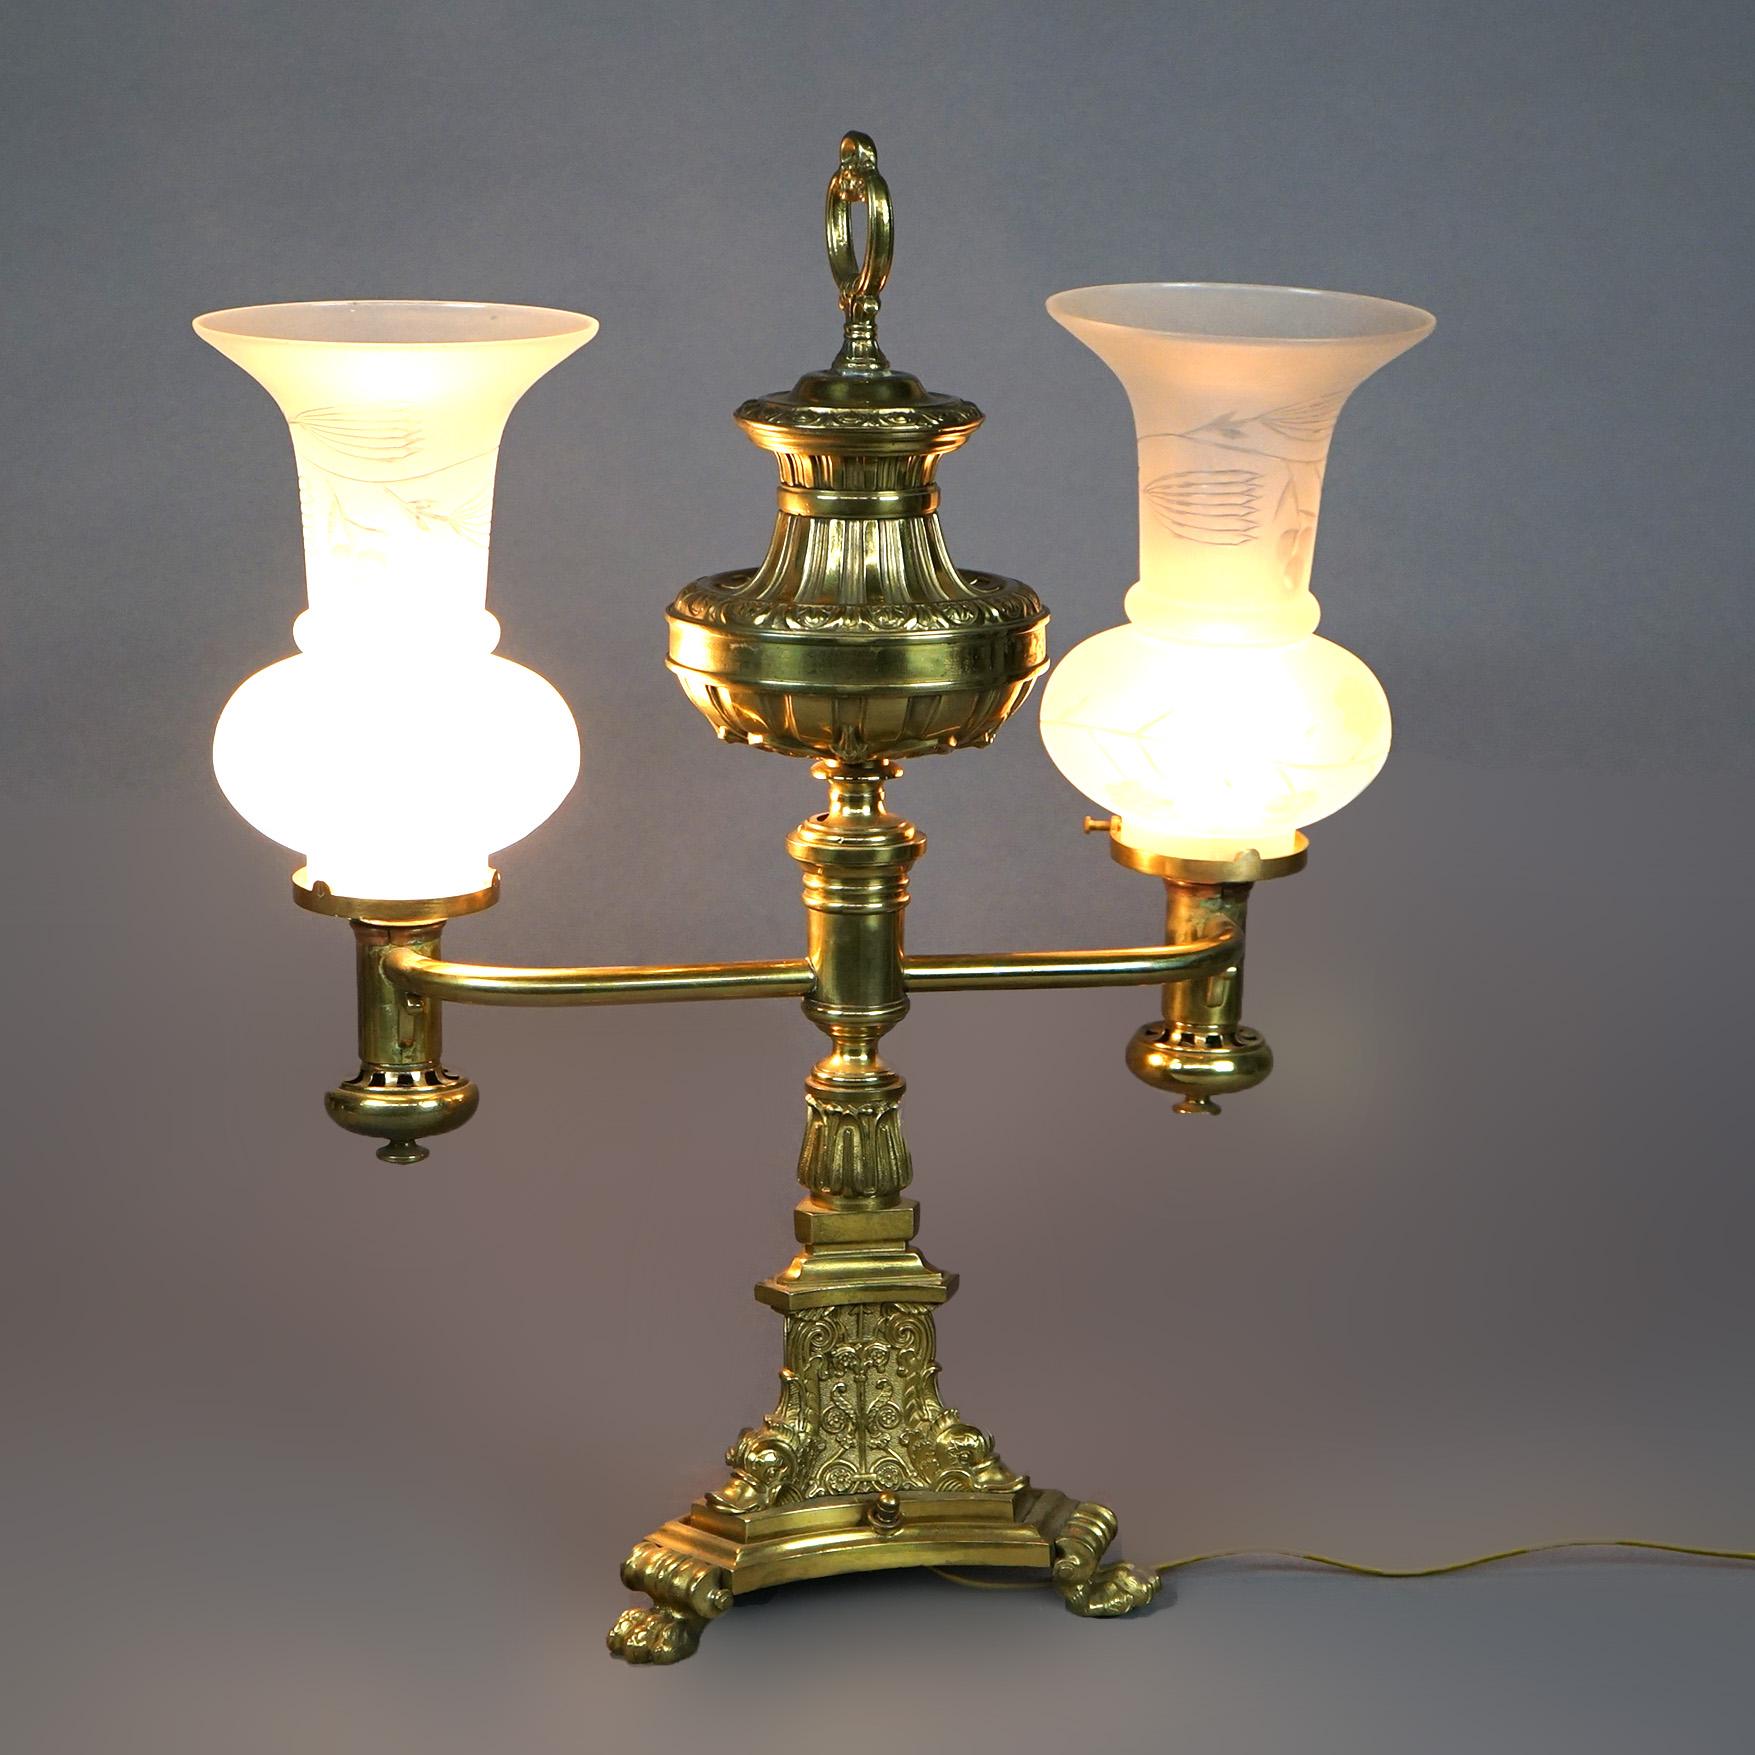 Greco Roman Antique Gilt Brass & Bronze Double Argand Lamp with Shades, circa 1820